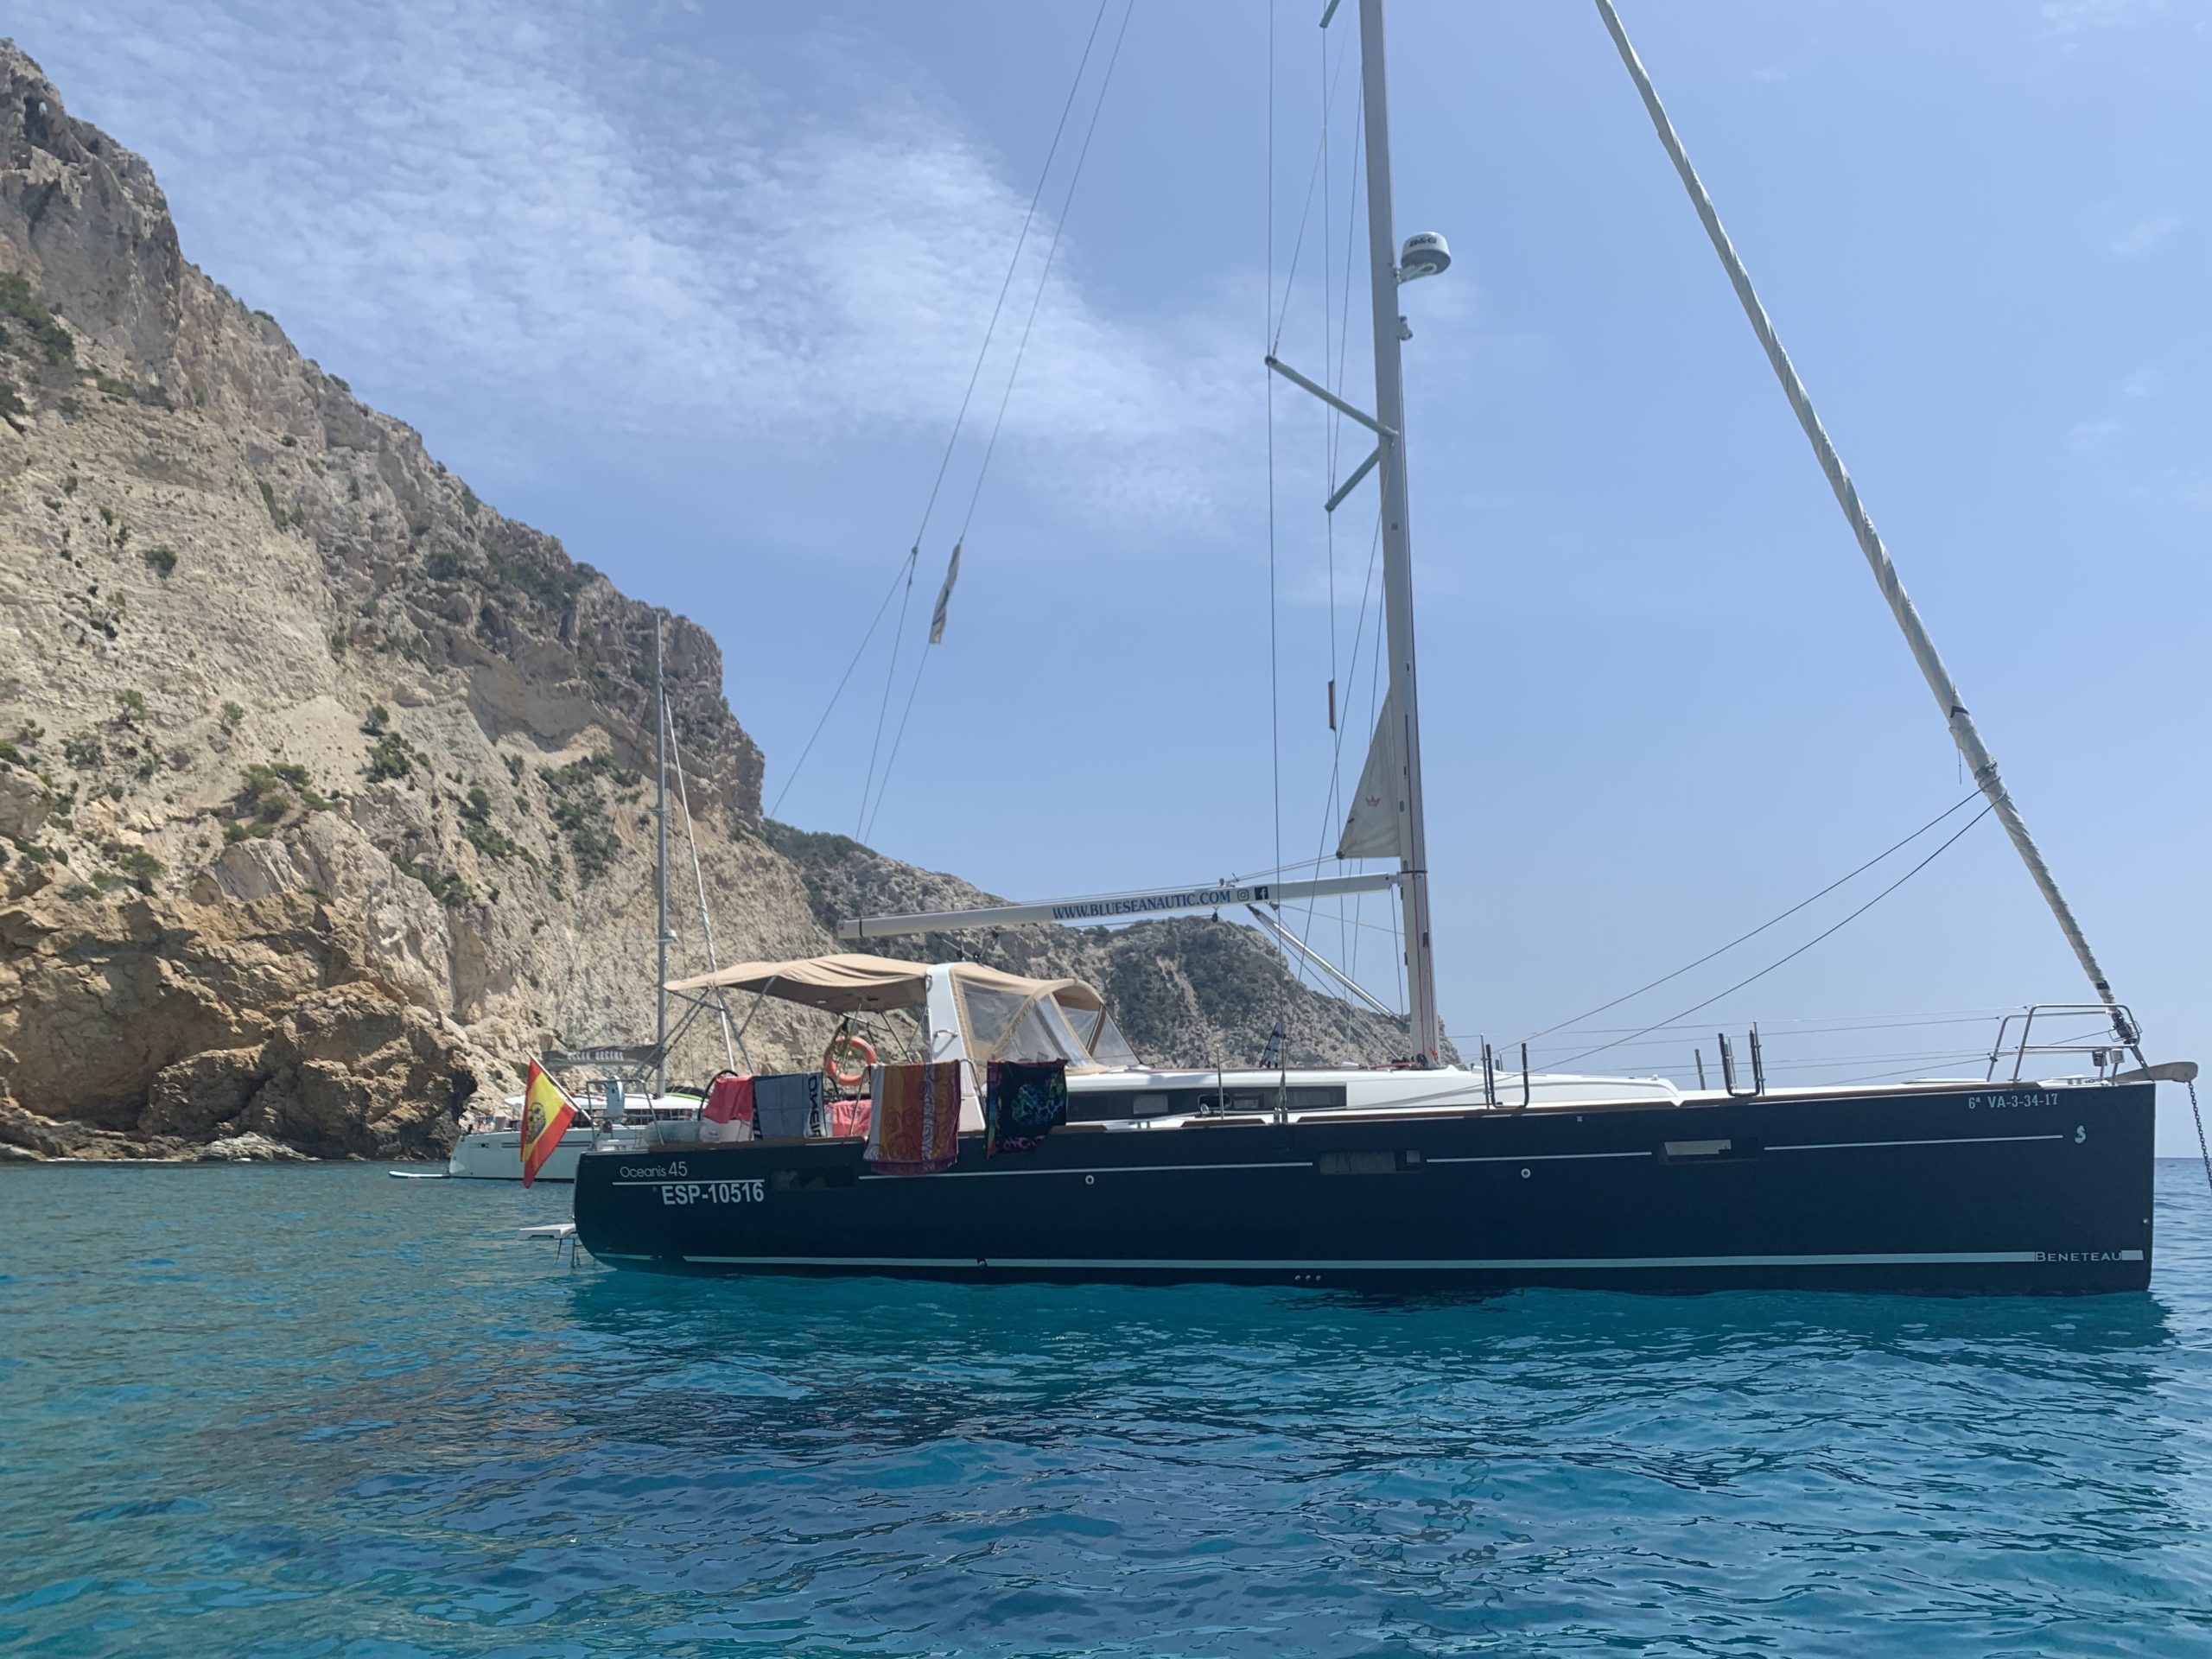 Alquiler velero charter en valencia